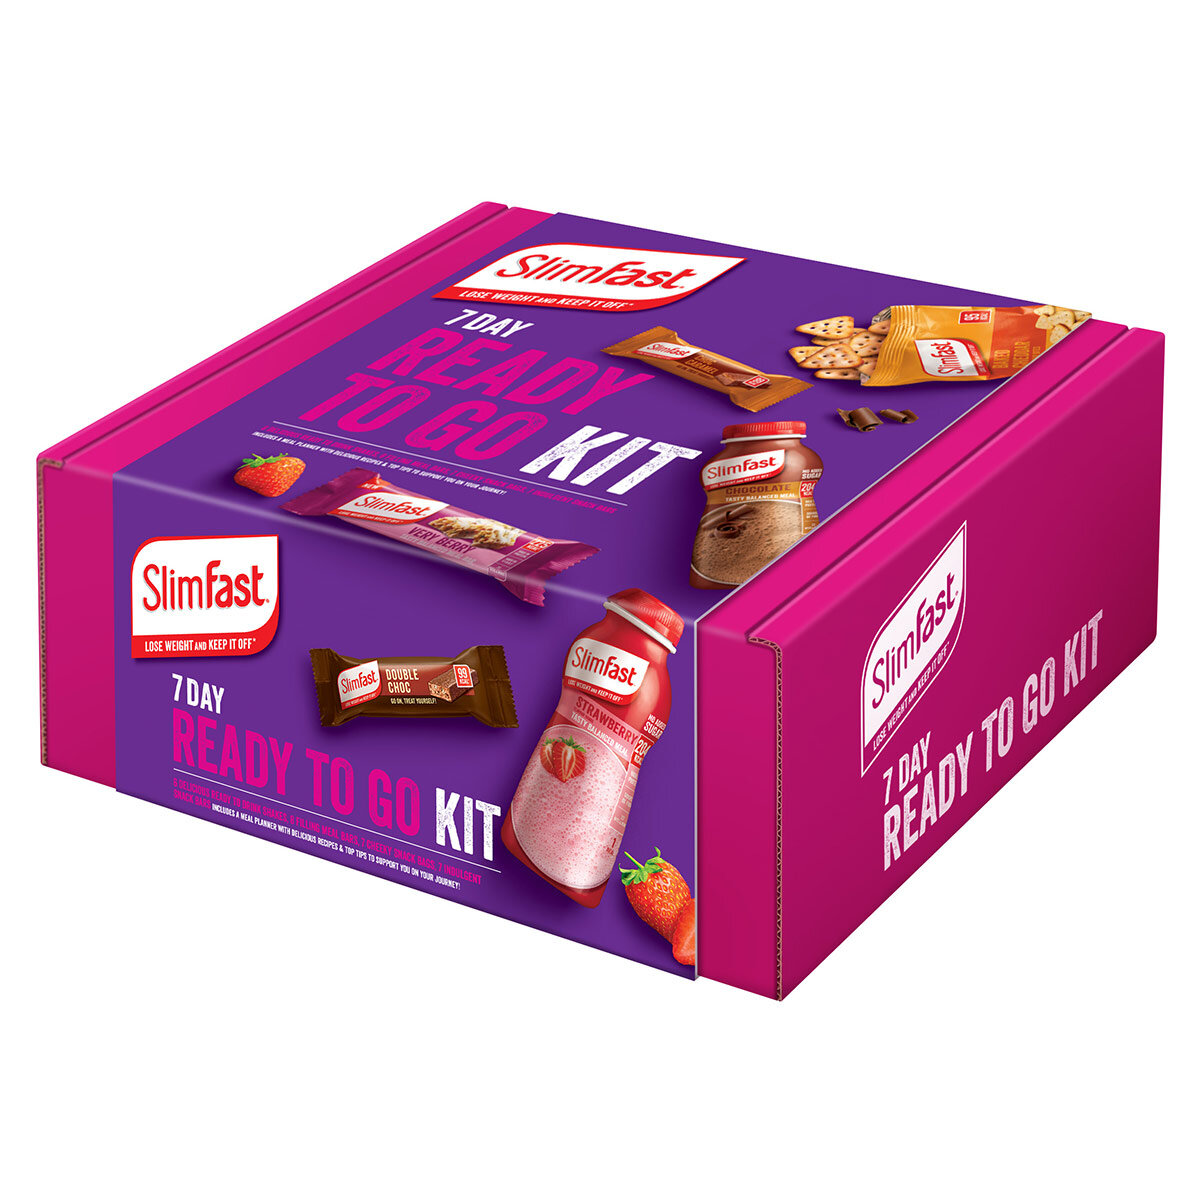 SlimFast starter kit in purple box